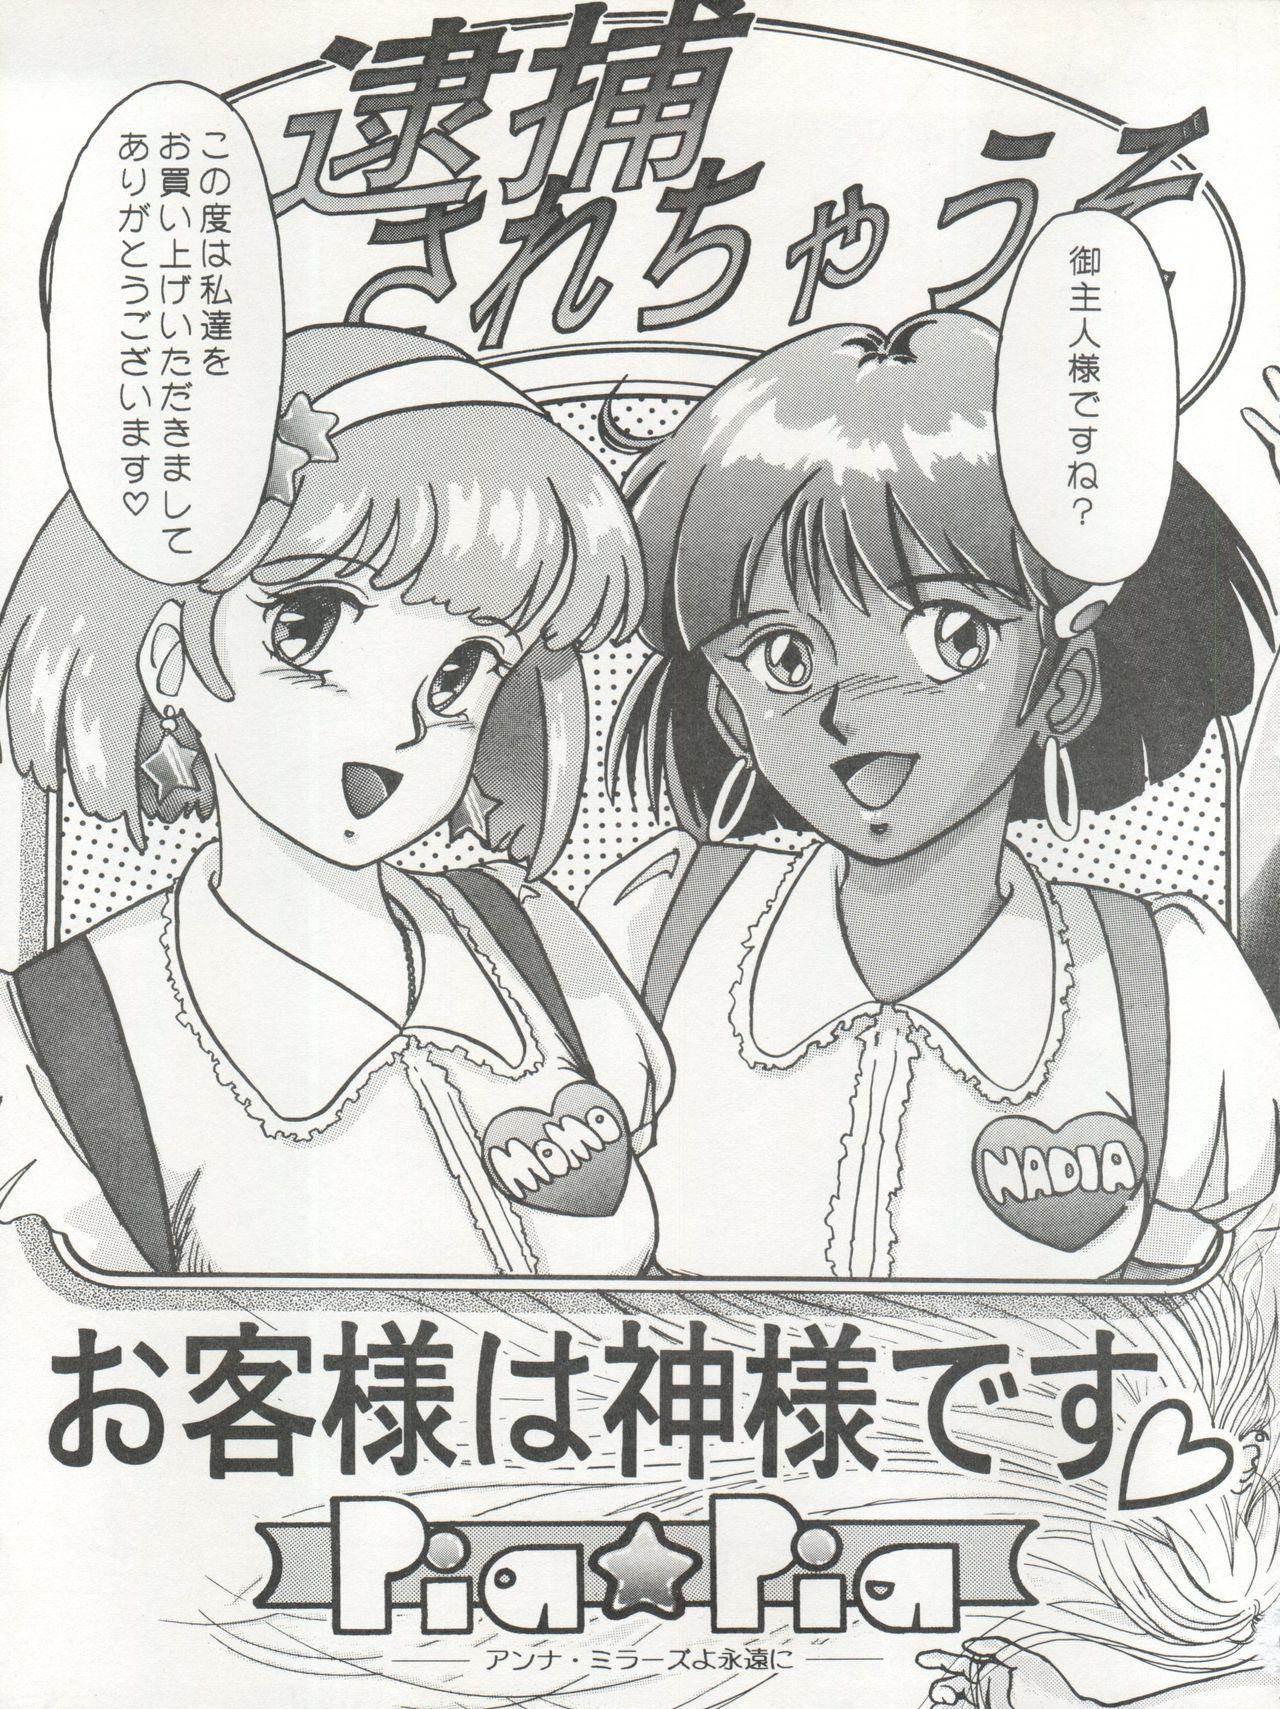 College 逮捕されちゃうぞ - Fushigi no umi no nadia Youre under arrest Minky momo 3x3 eyes Crazy - Page 3